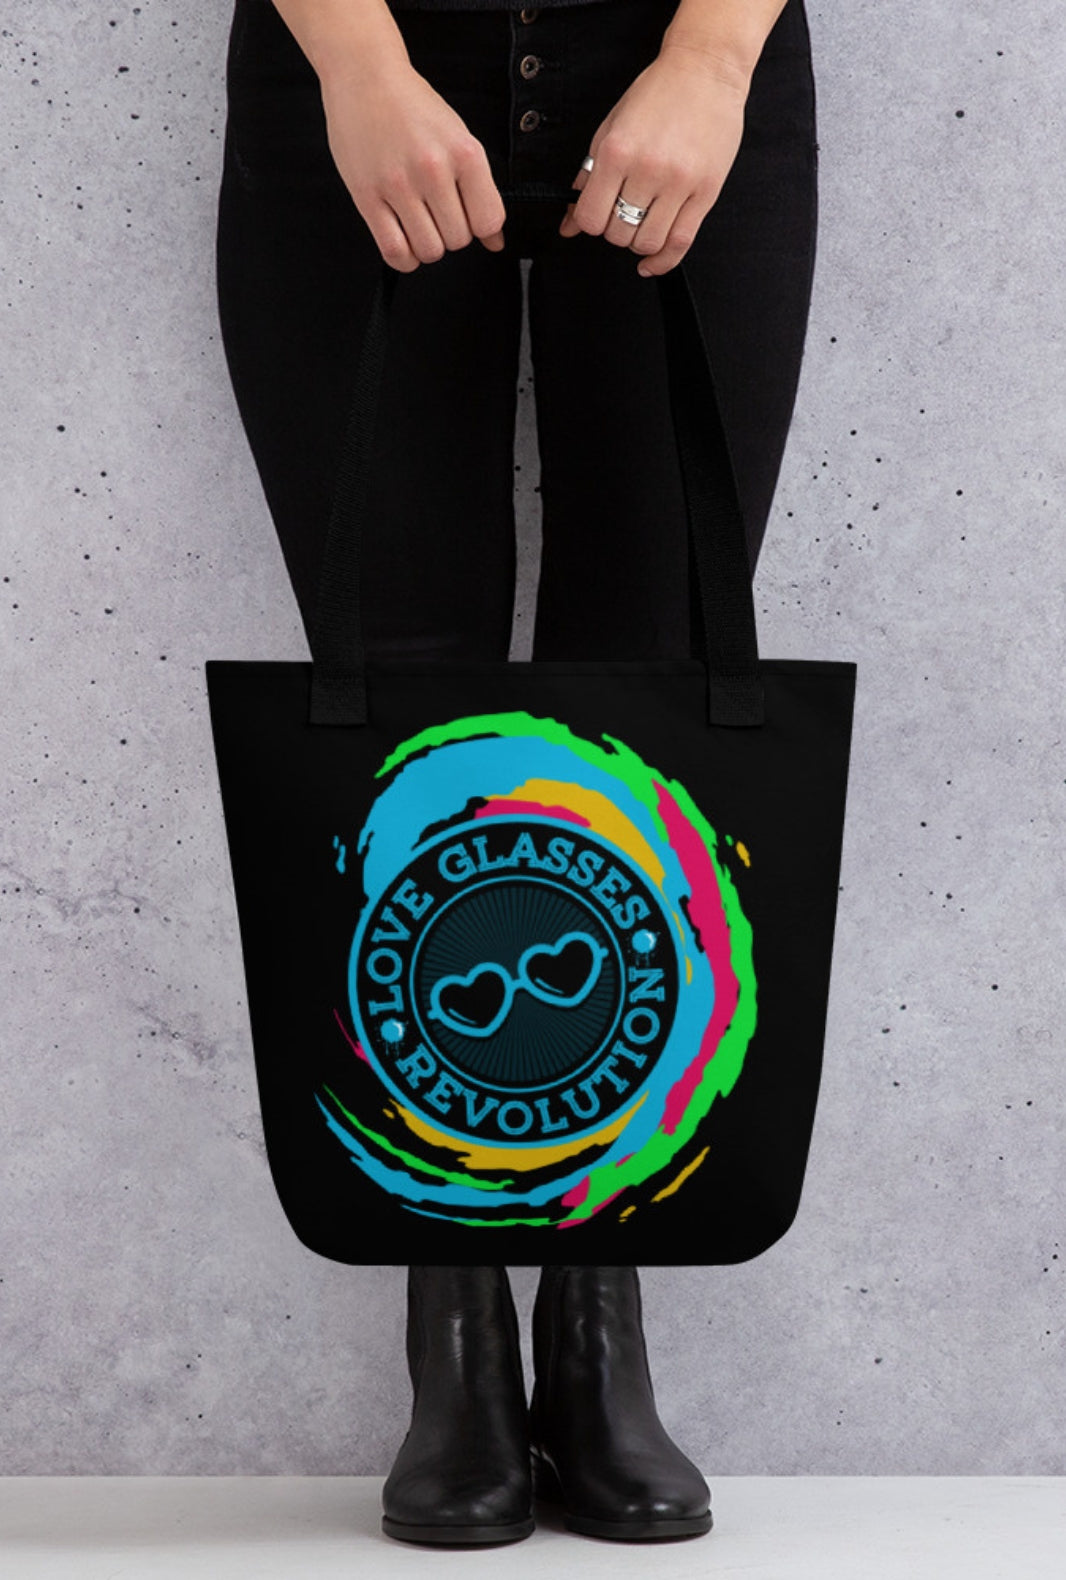 LGR swirl logo Tote bag - Love Glasses Revolution